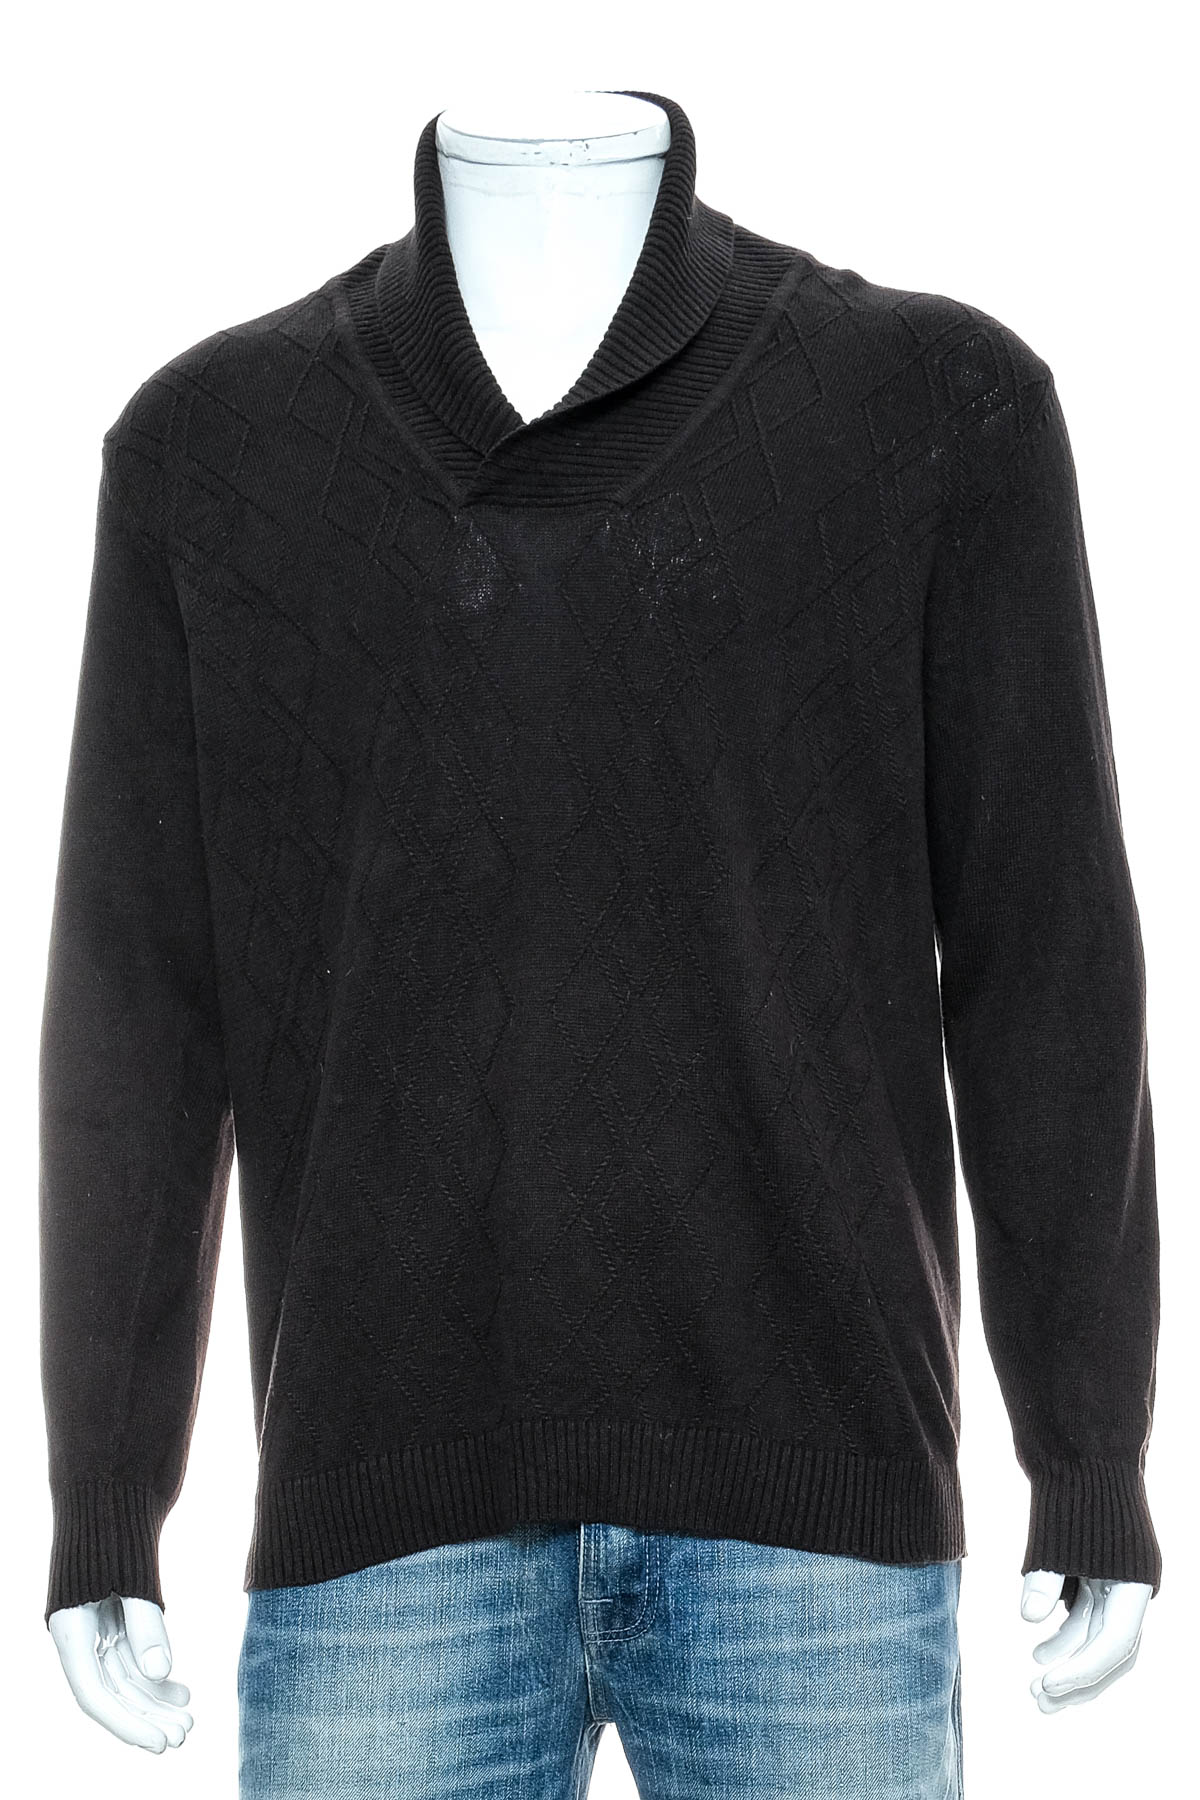 Men's sweater - Perry Ellis - 0